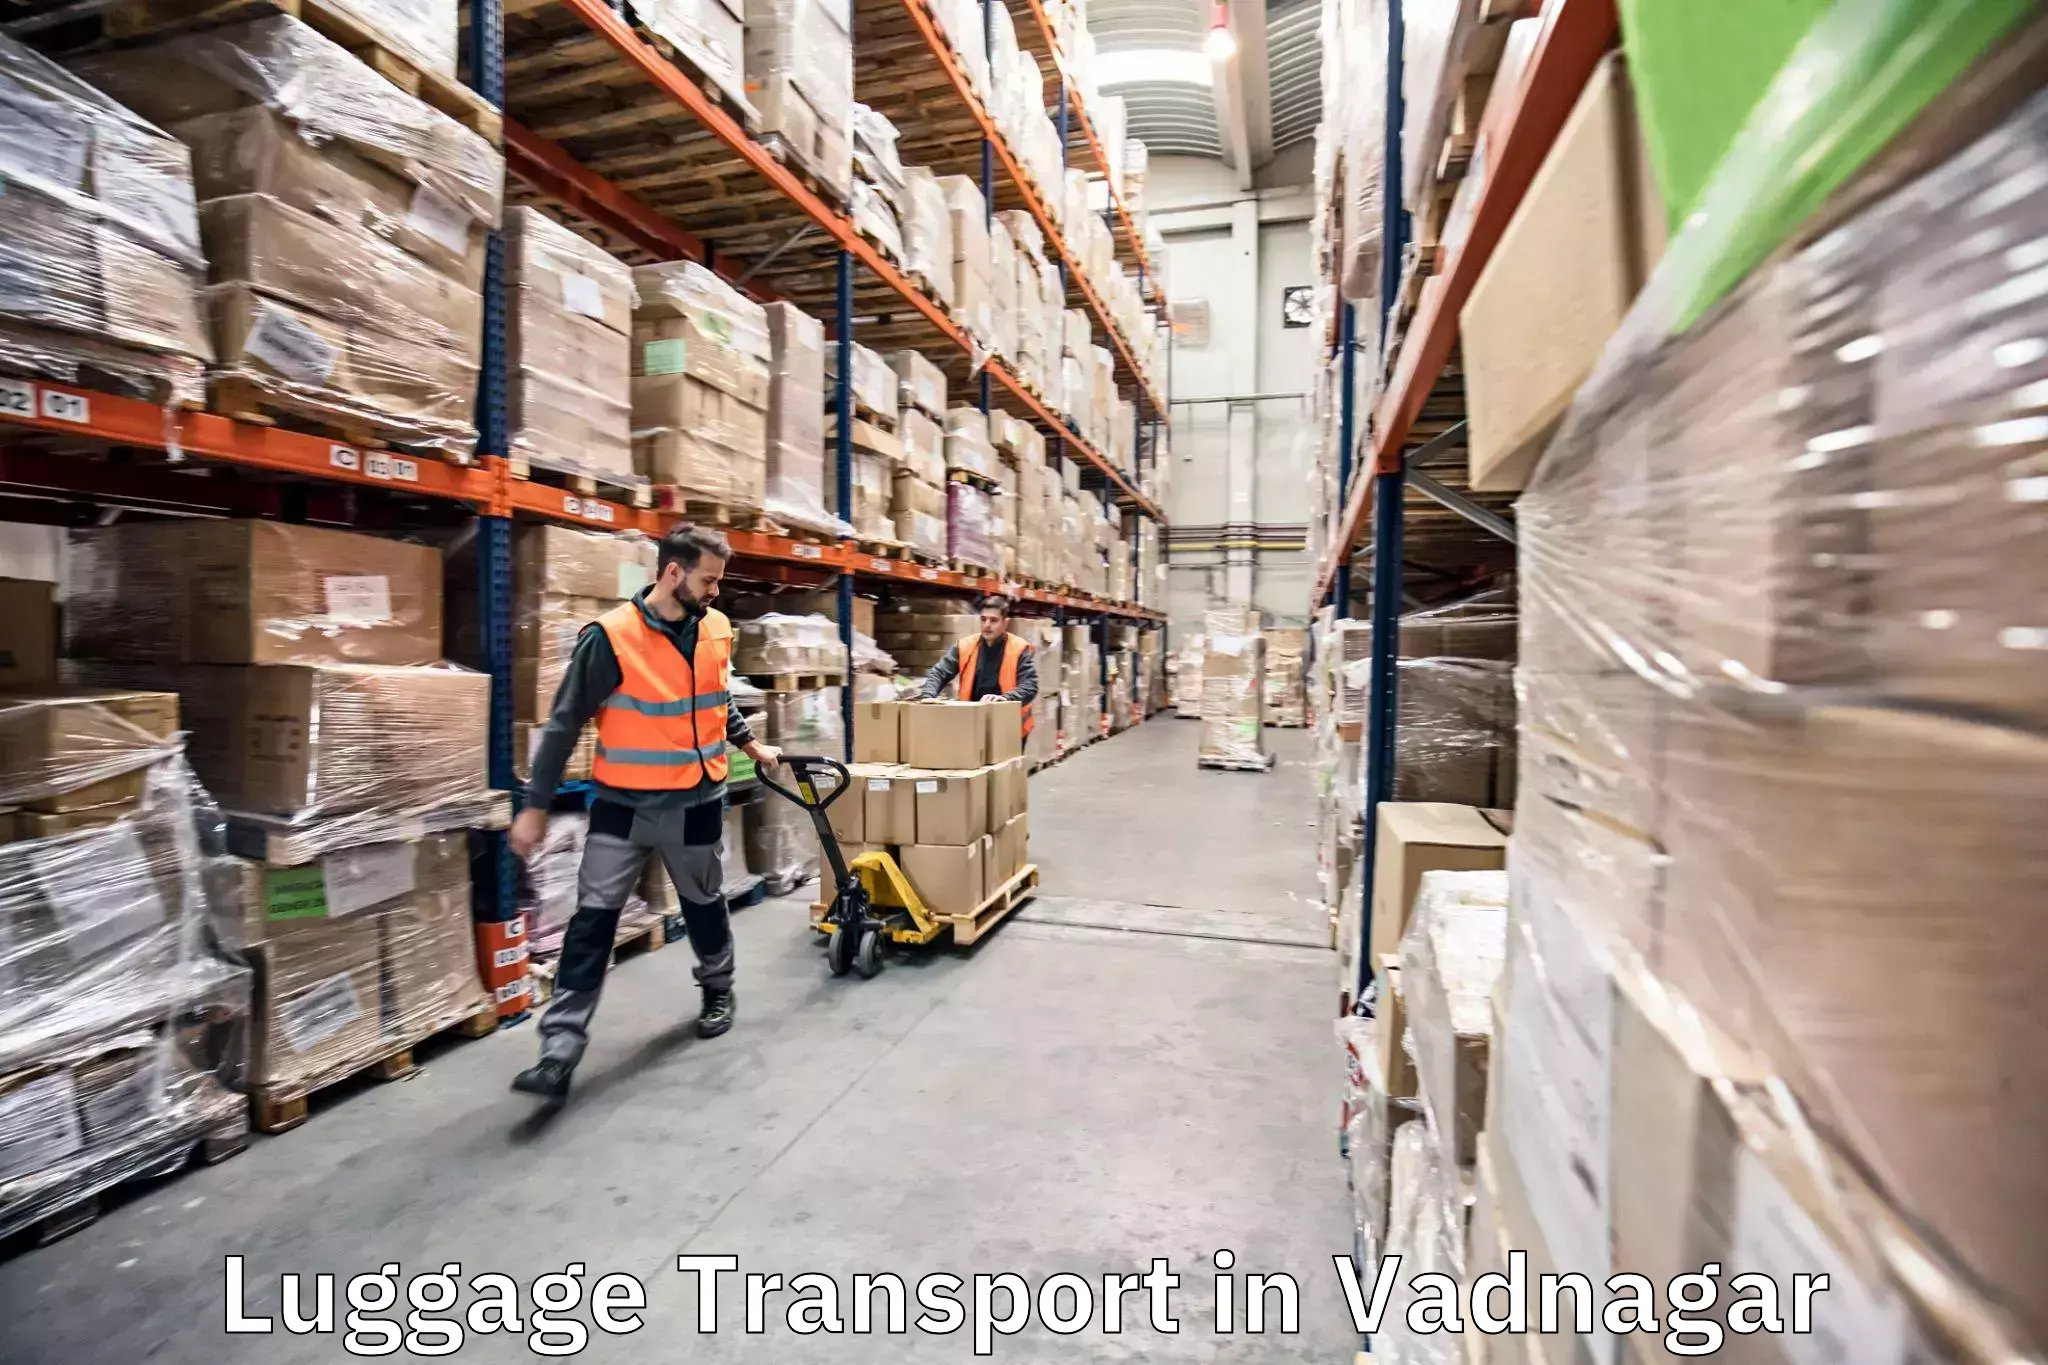 Luggage shipment specialists in Vadnagar